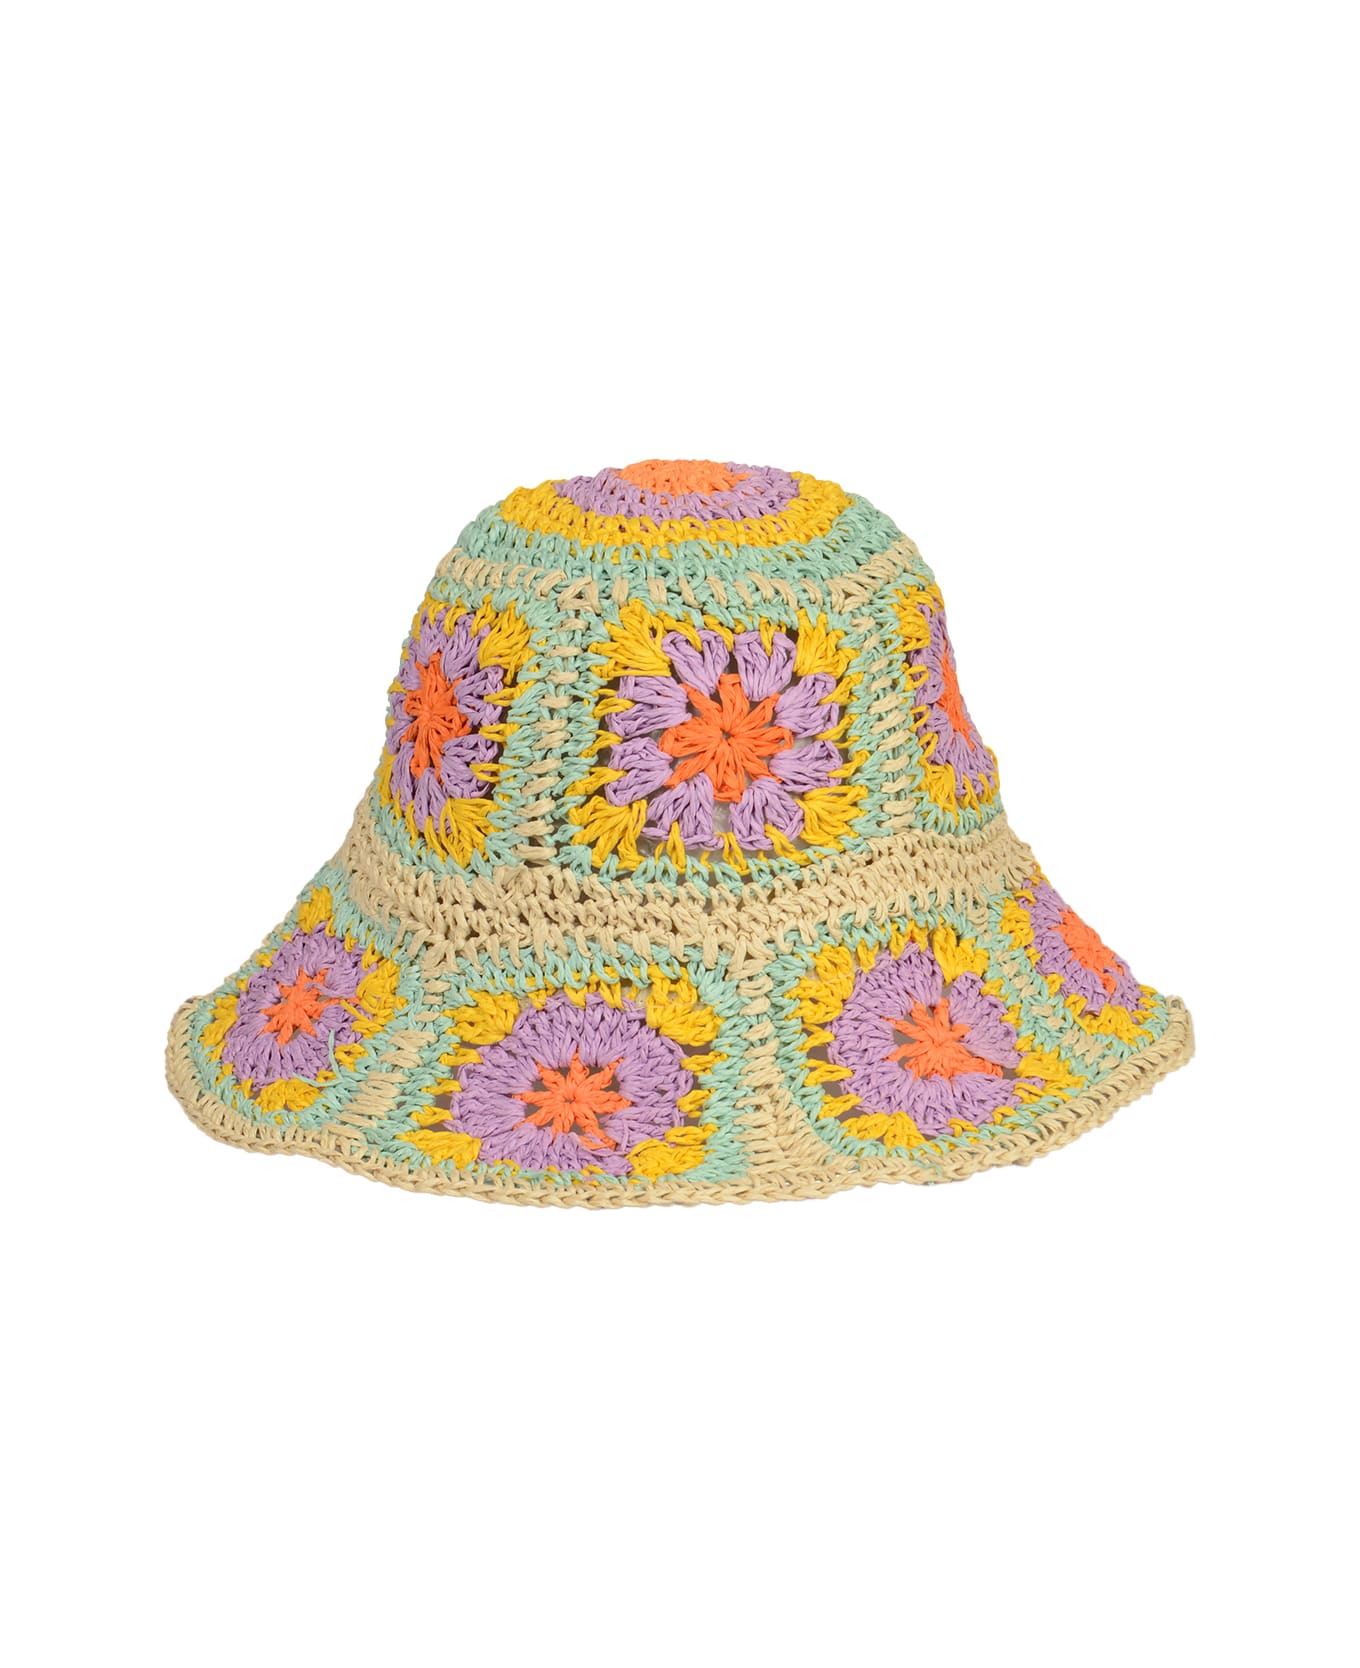 Weili Zheng Crochet Patterned Hat - Pastel 帽子